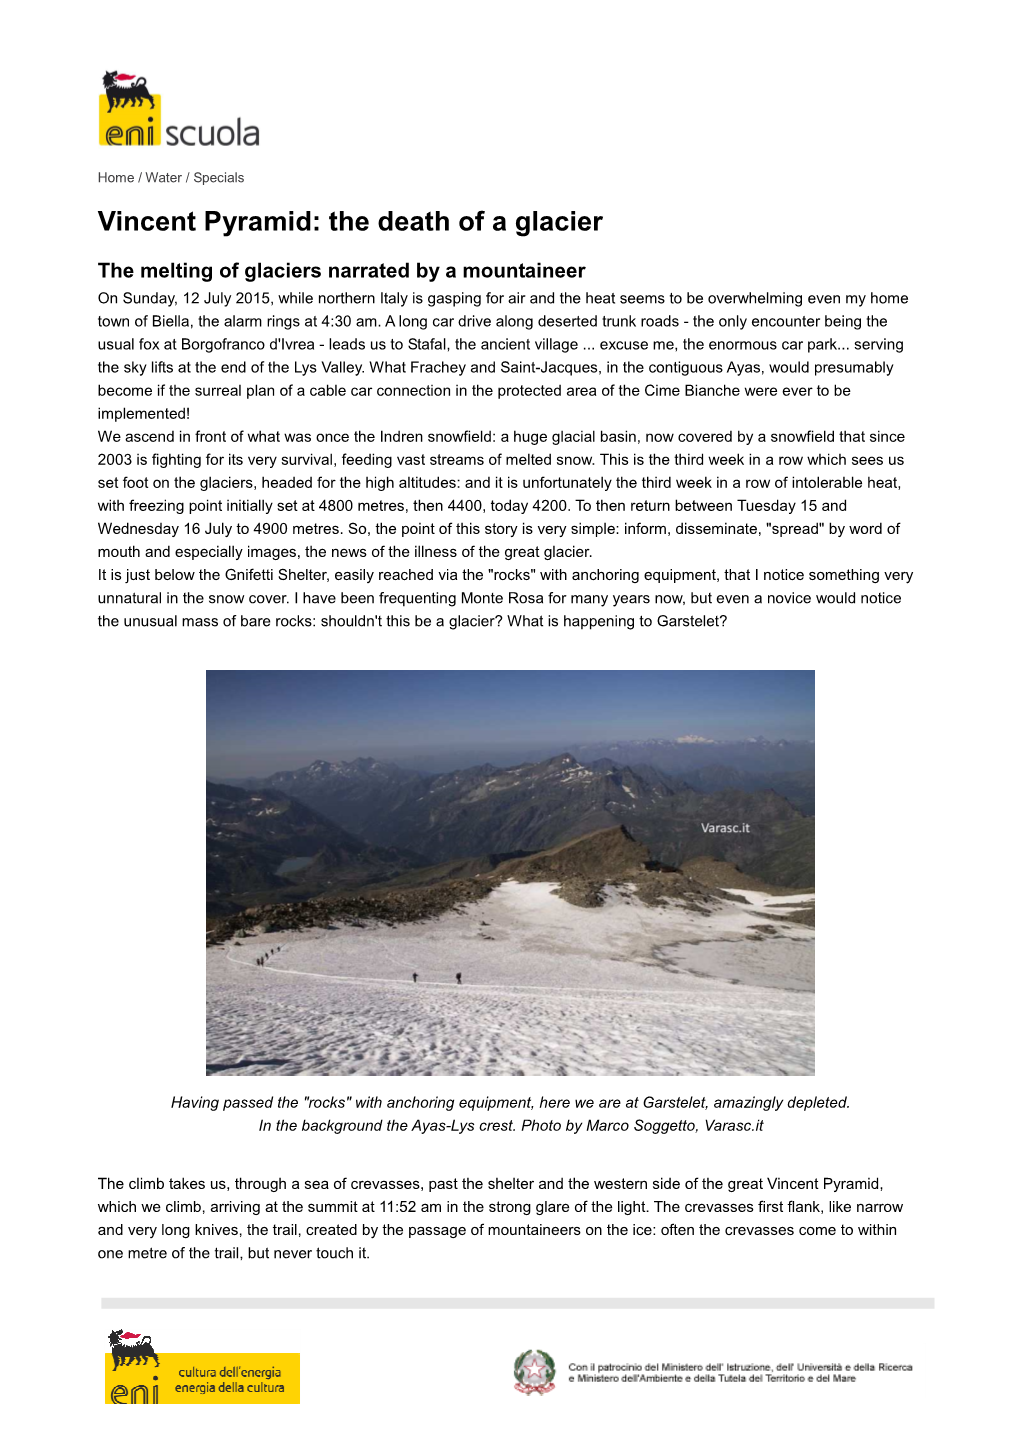 Vincent Pyramid: the Death of a Glacier